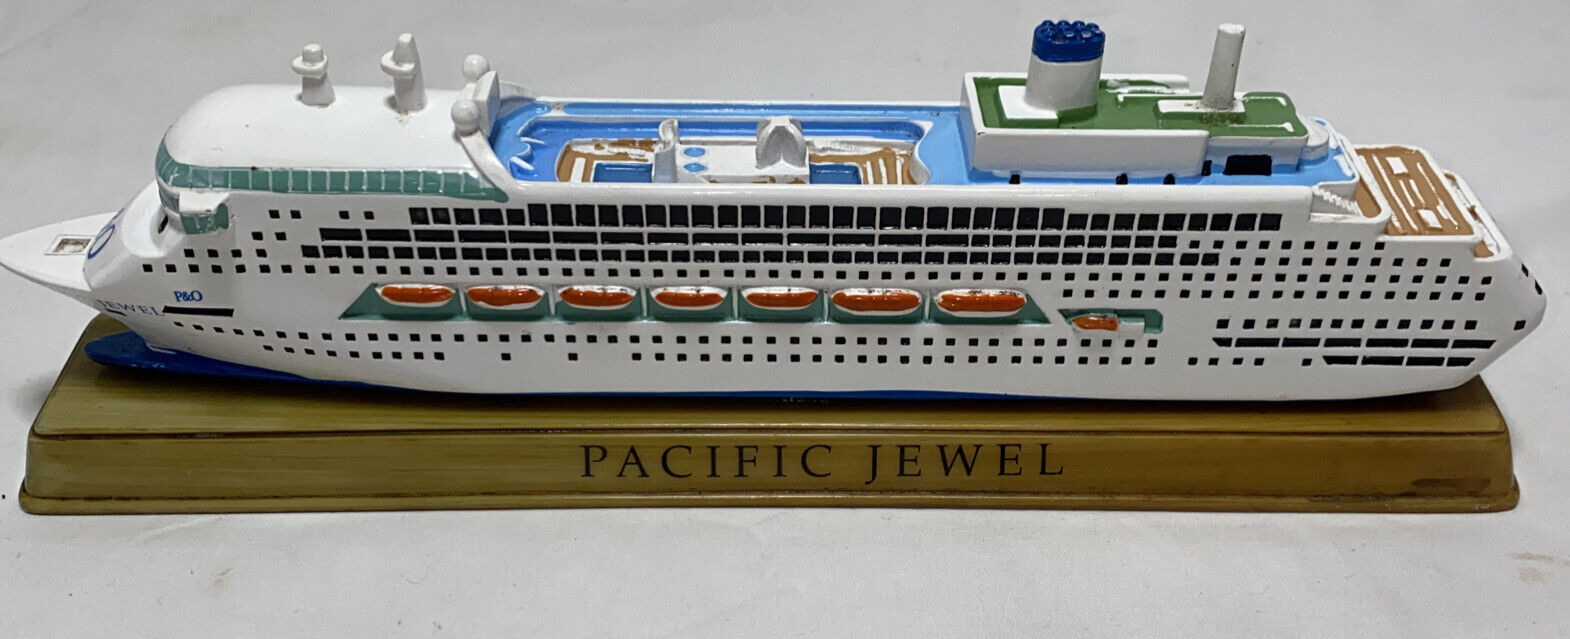 P&O PACIFIC JEWEL Resin Model Cruise Ship